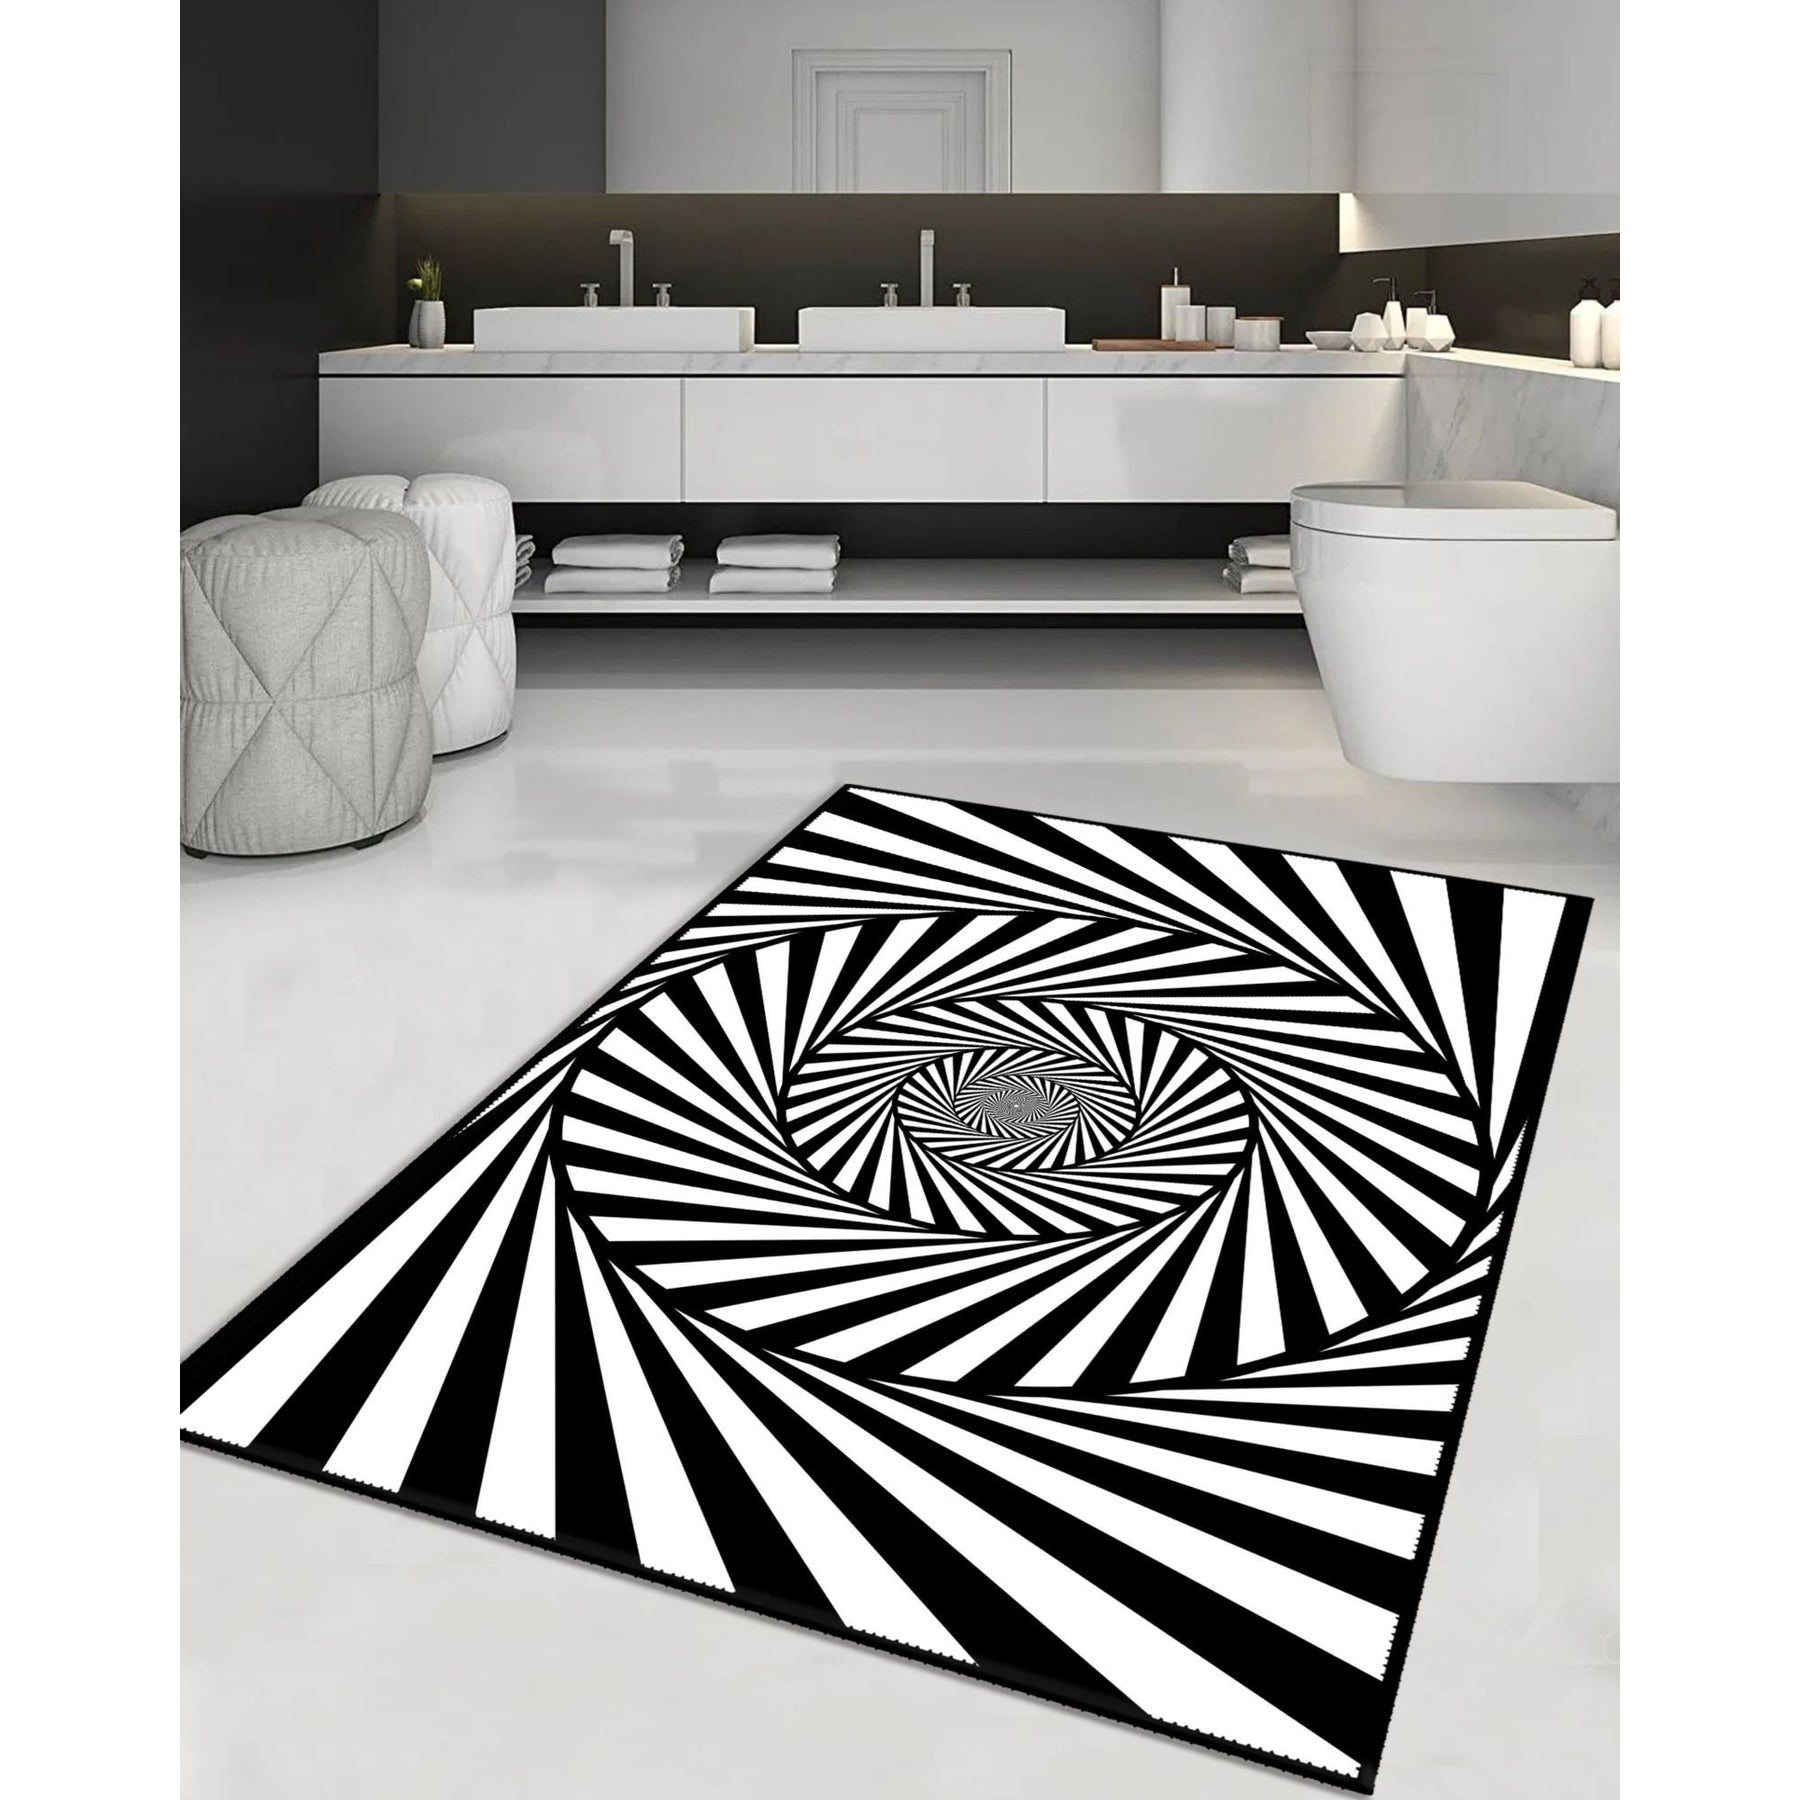 3D Vortex Illusion Carpets Entrance Door Floor Mats Non-slip Rugs Home Decor